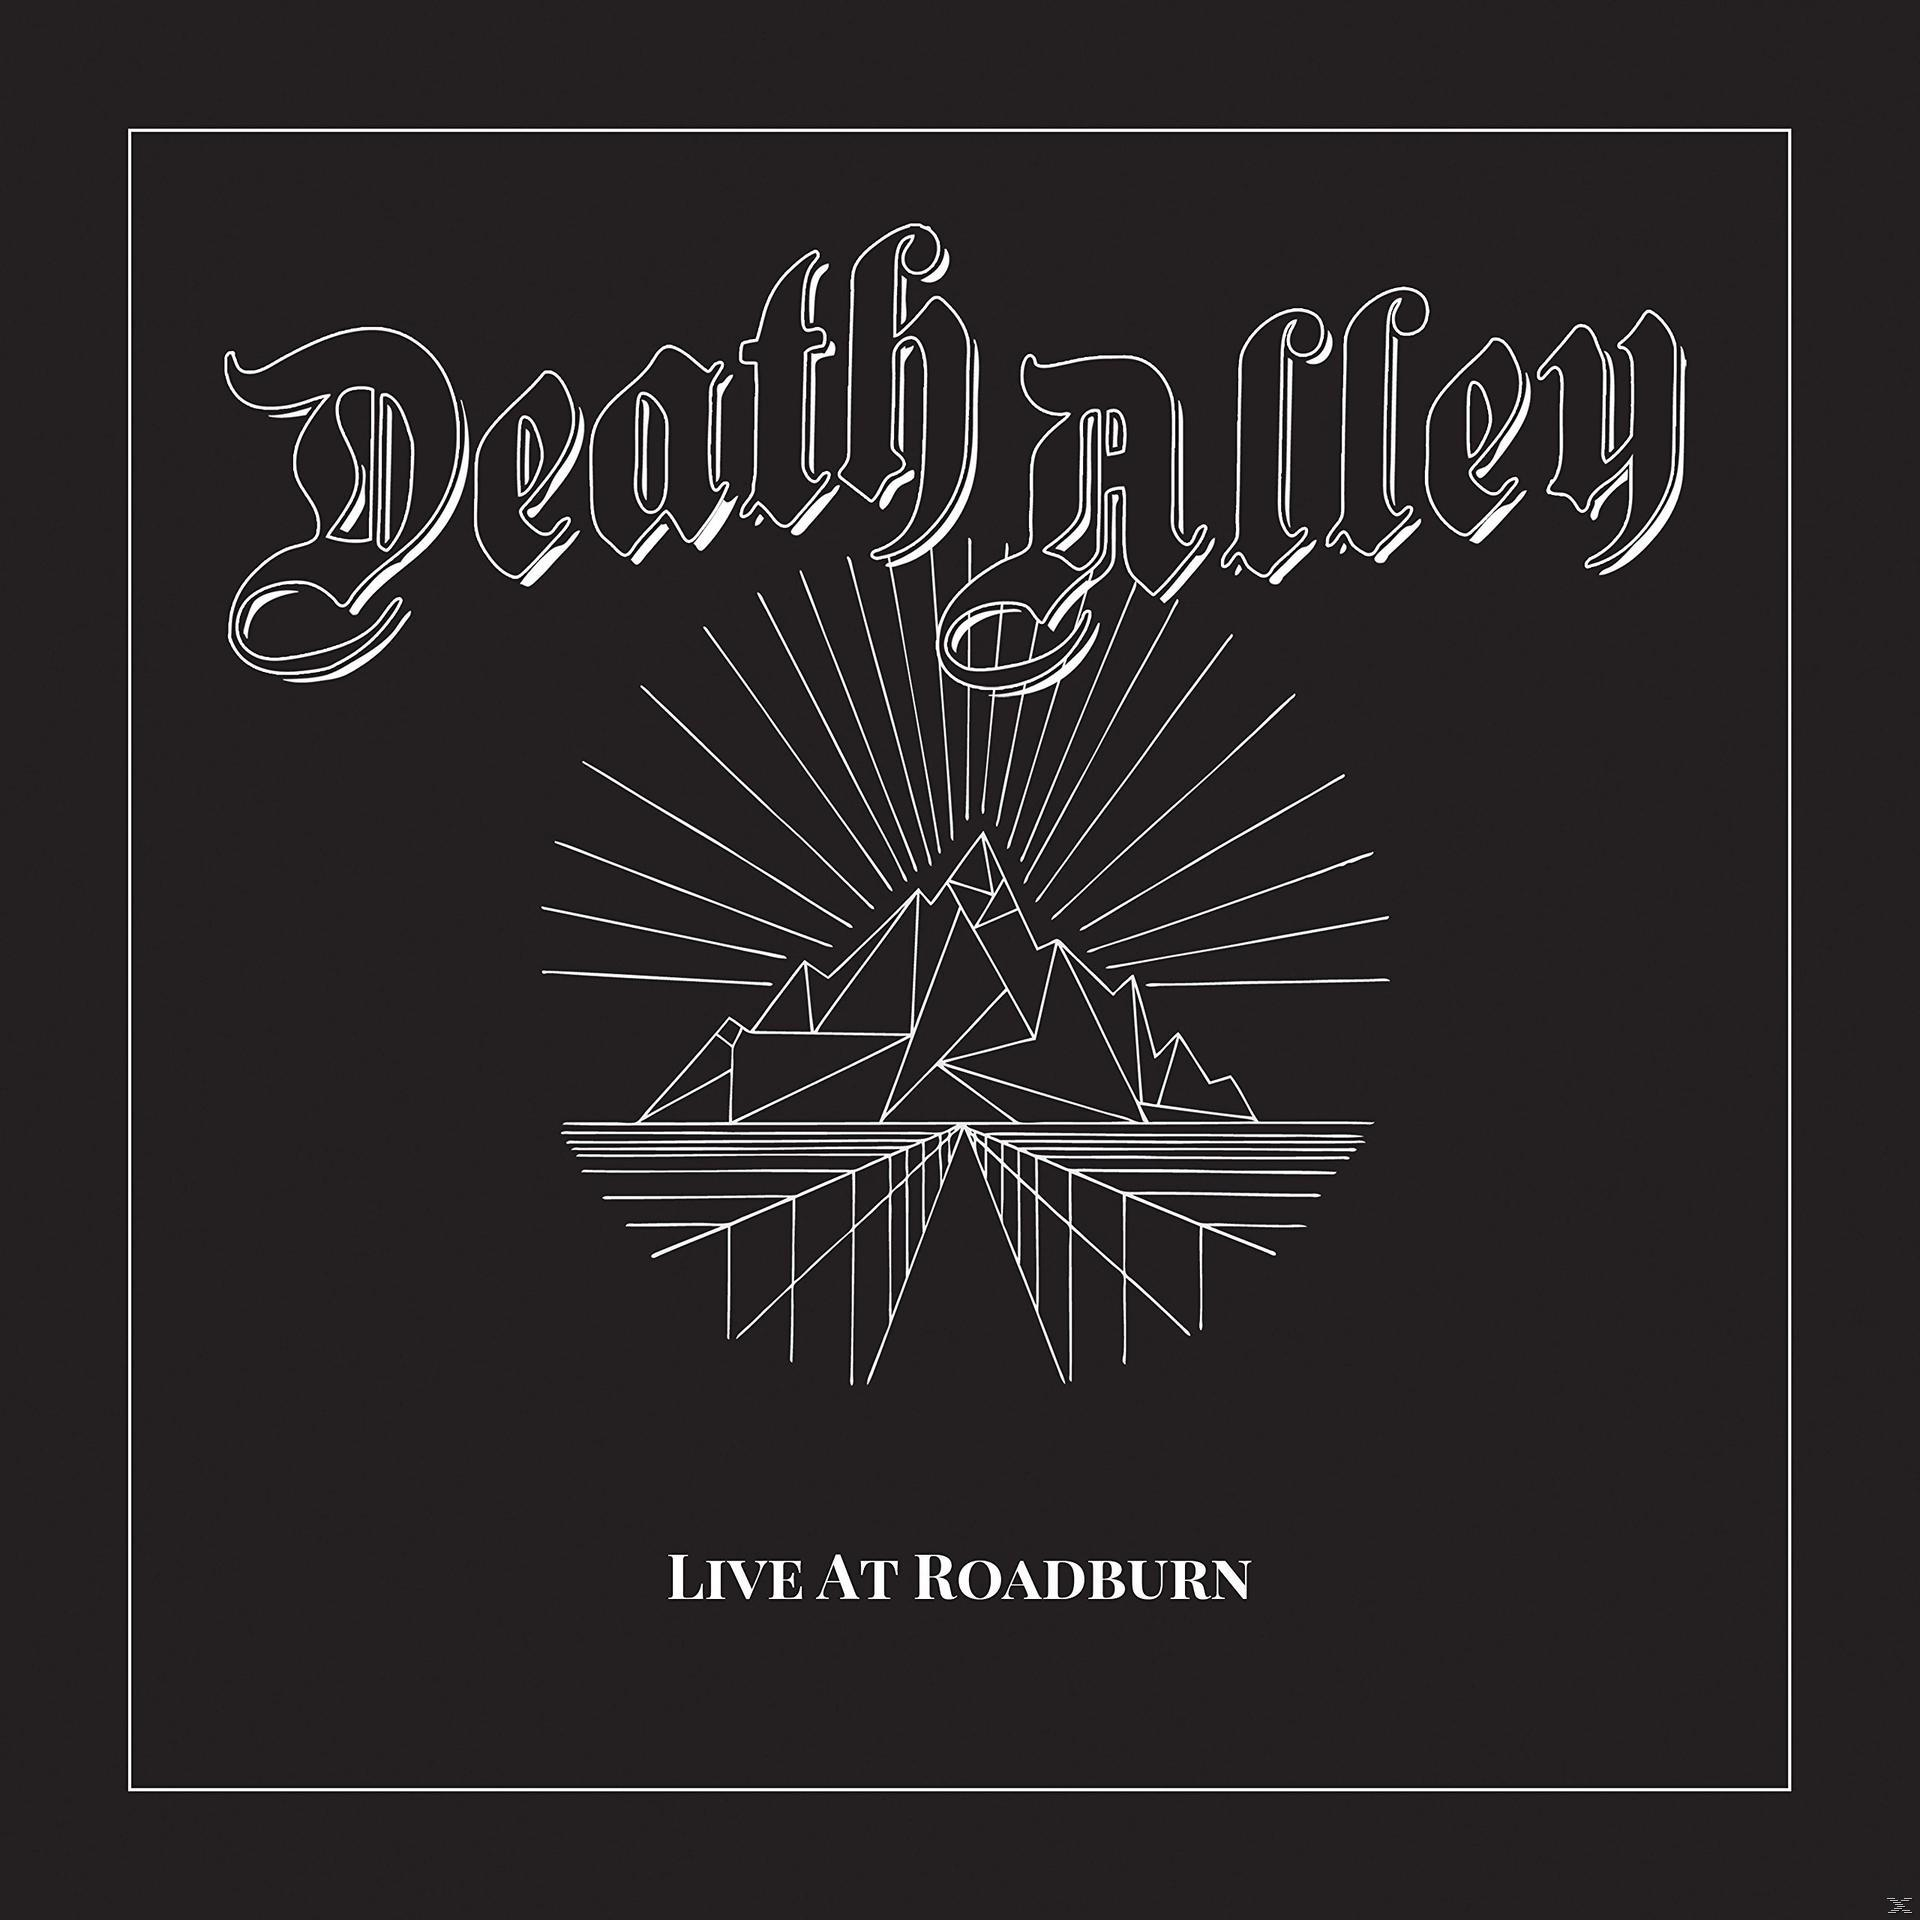 Death Alley - Live At (CD) - Roadburn